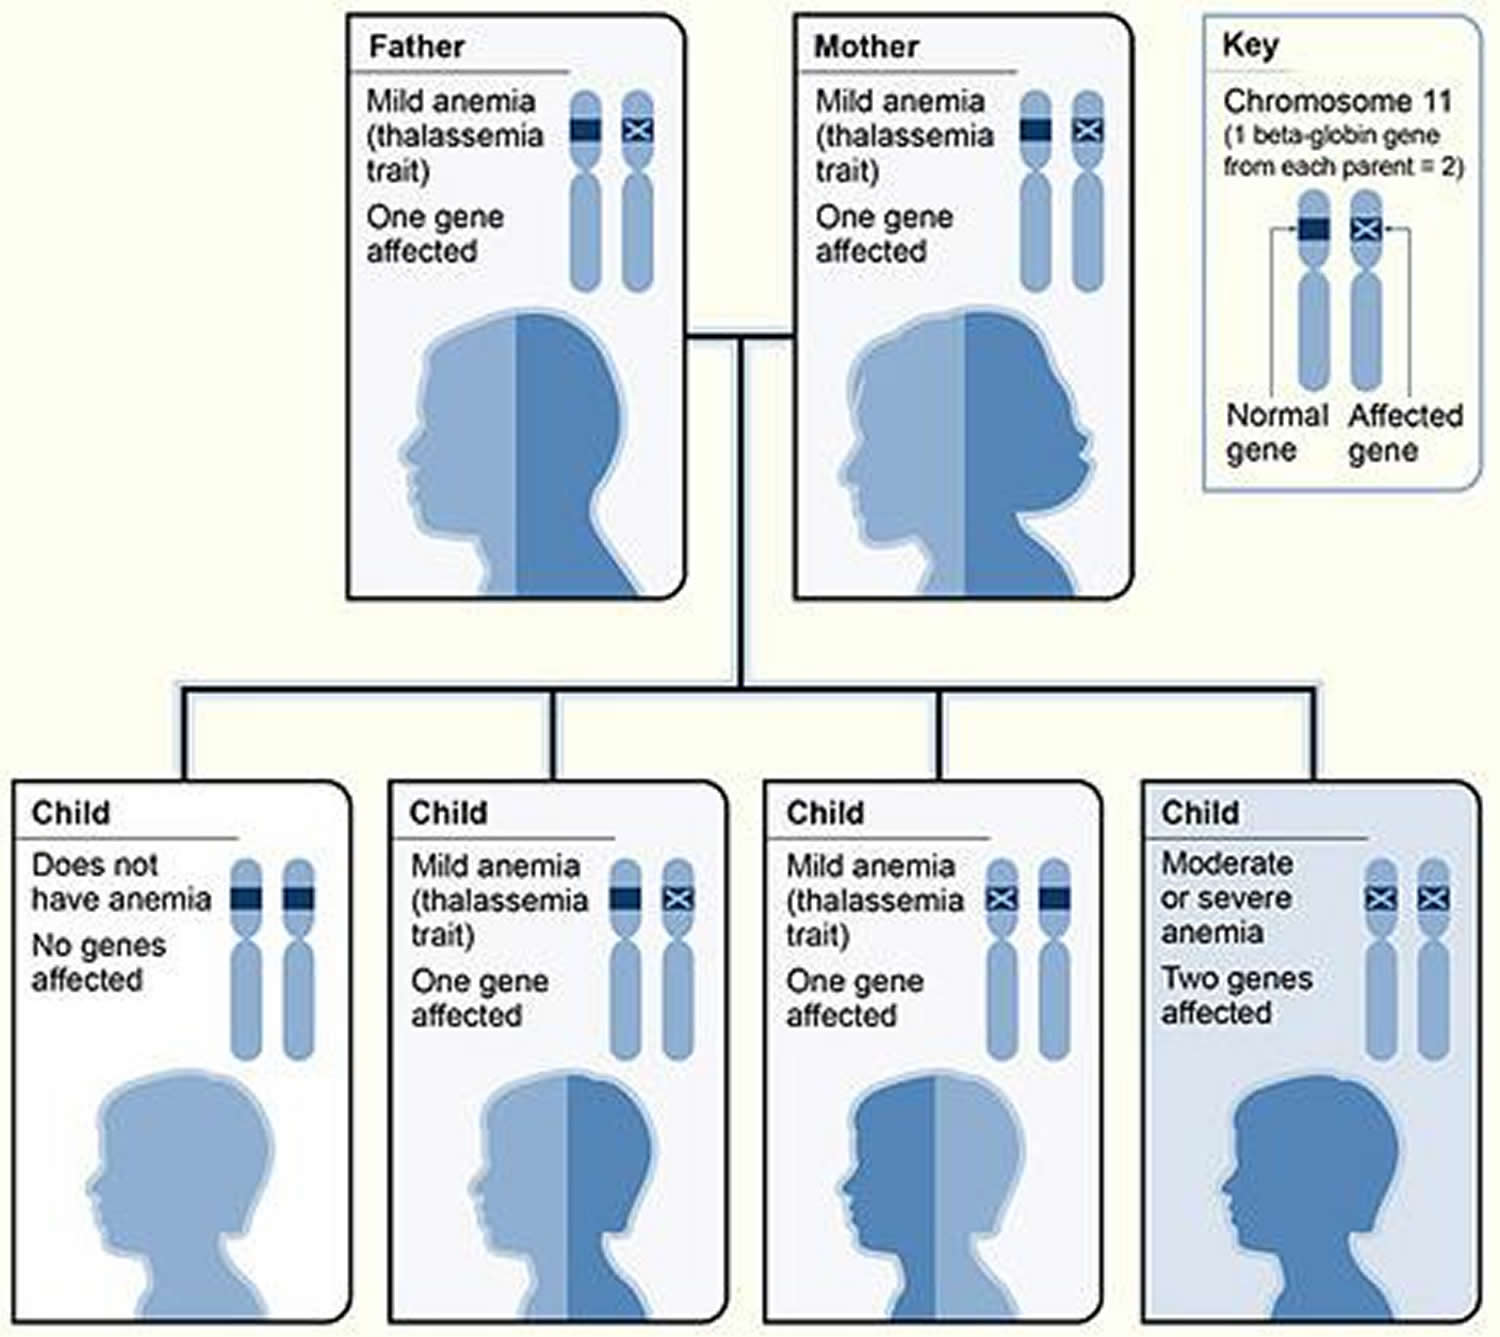 Beta Thalassemia inheritance pattern